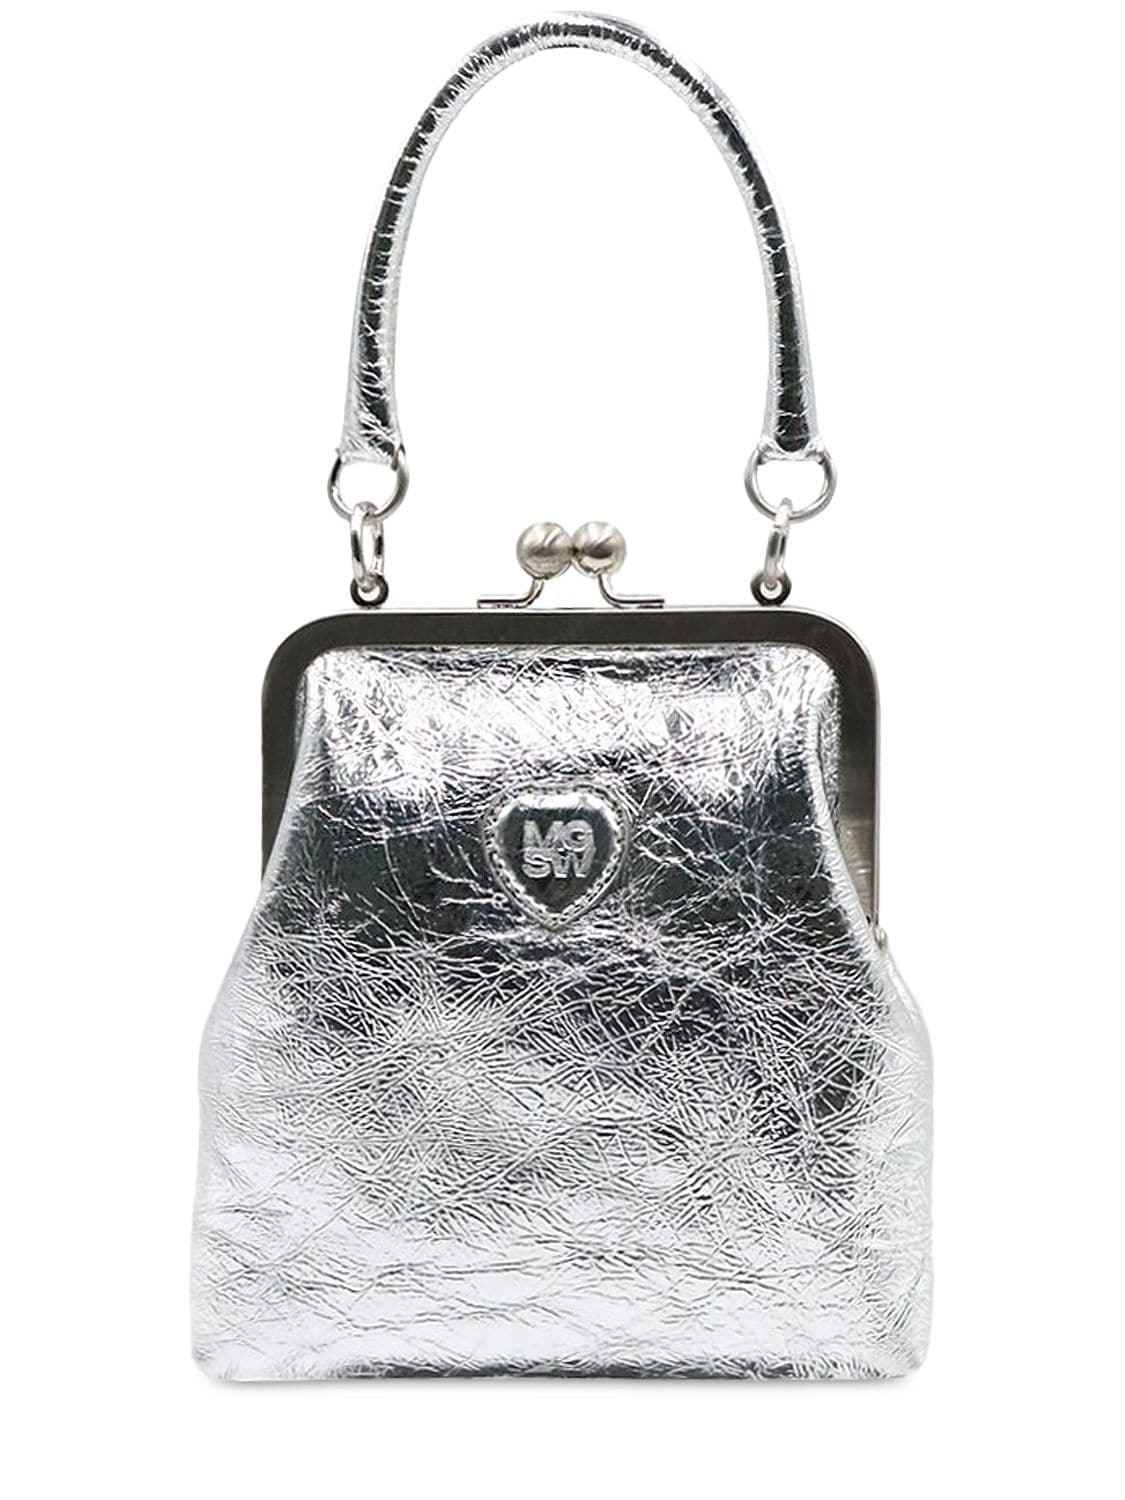 Marge Sherwood Bolita Frame Crinkled Leather Bag In Silver